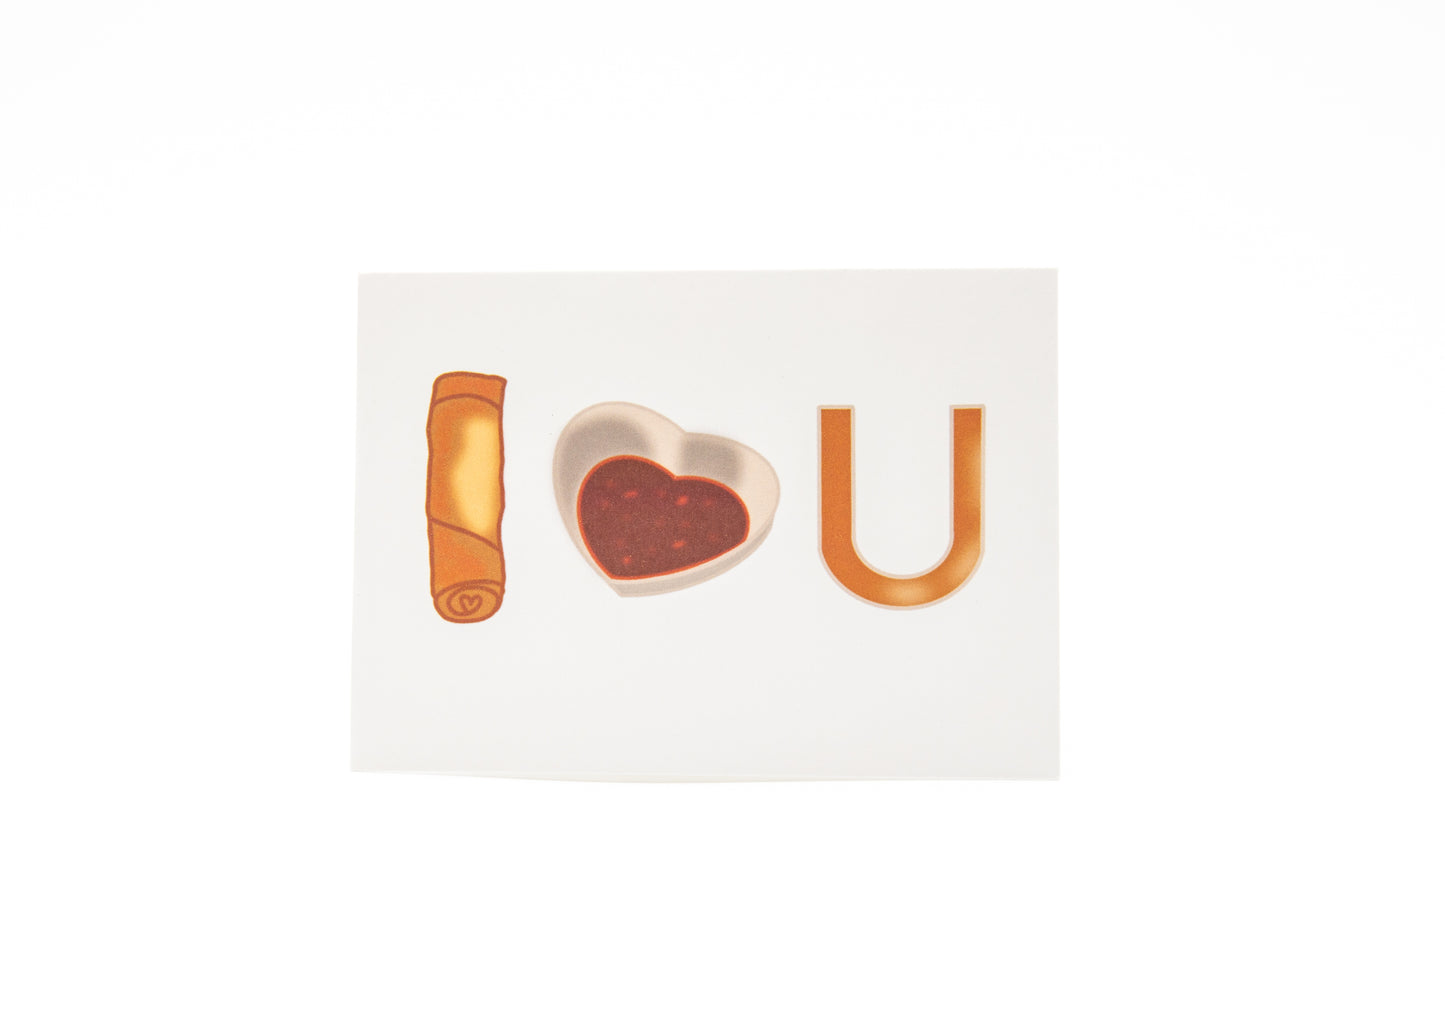 I Love You (Lumpia) Greeting Card